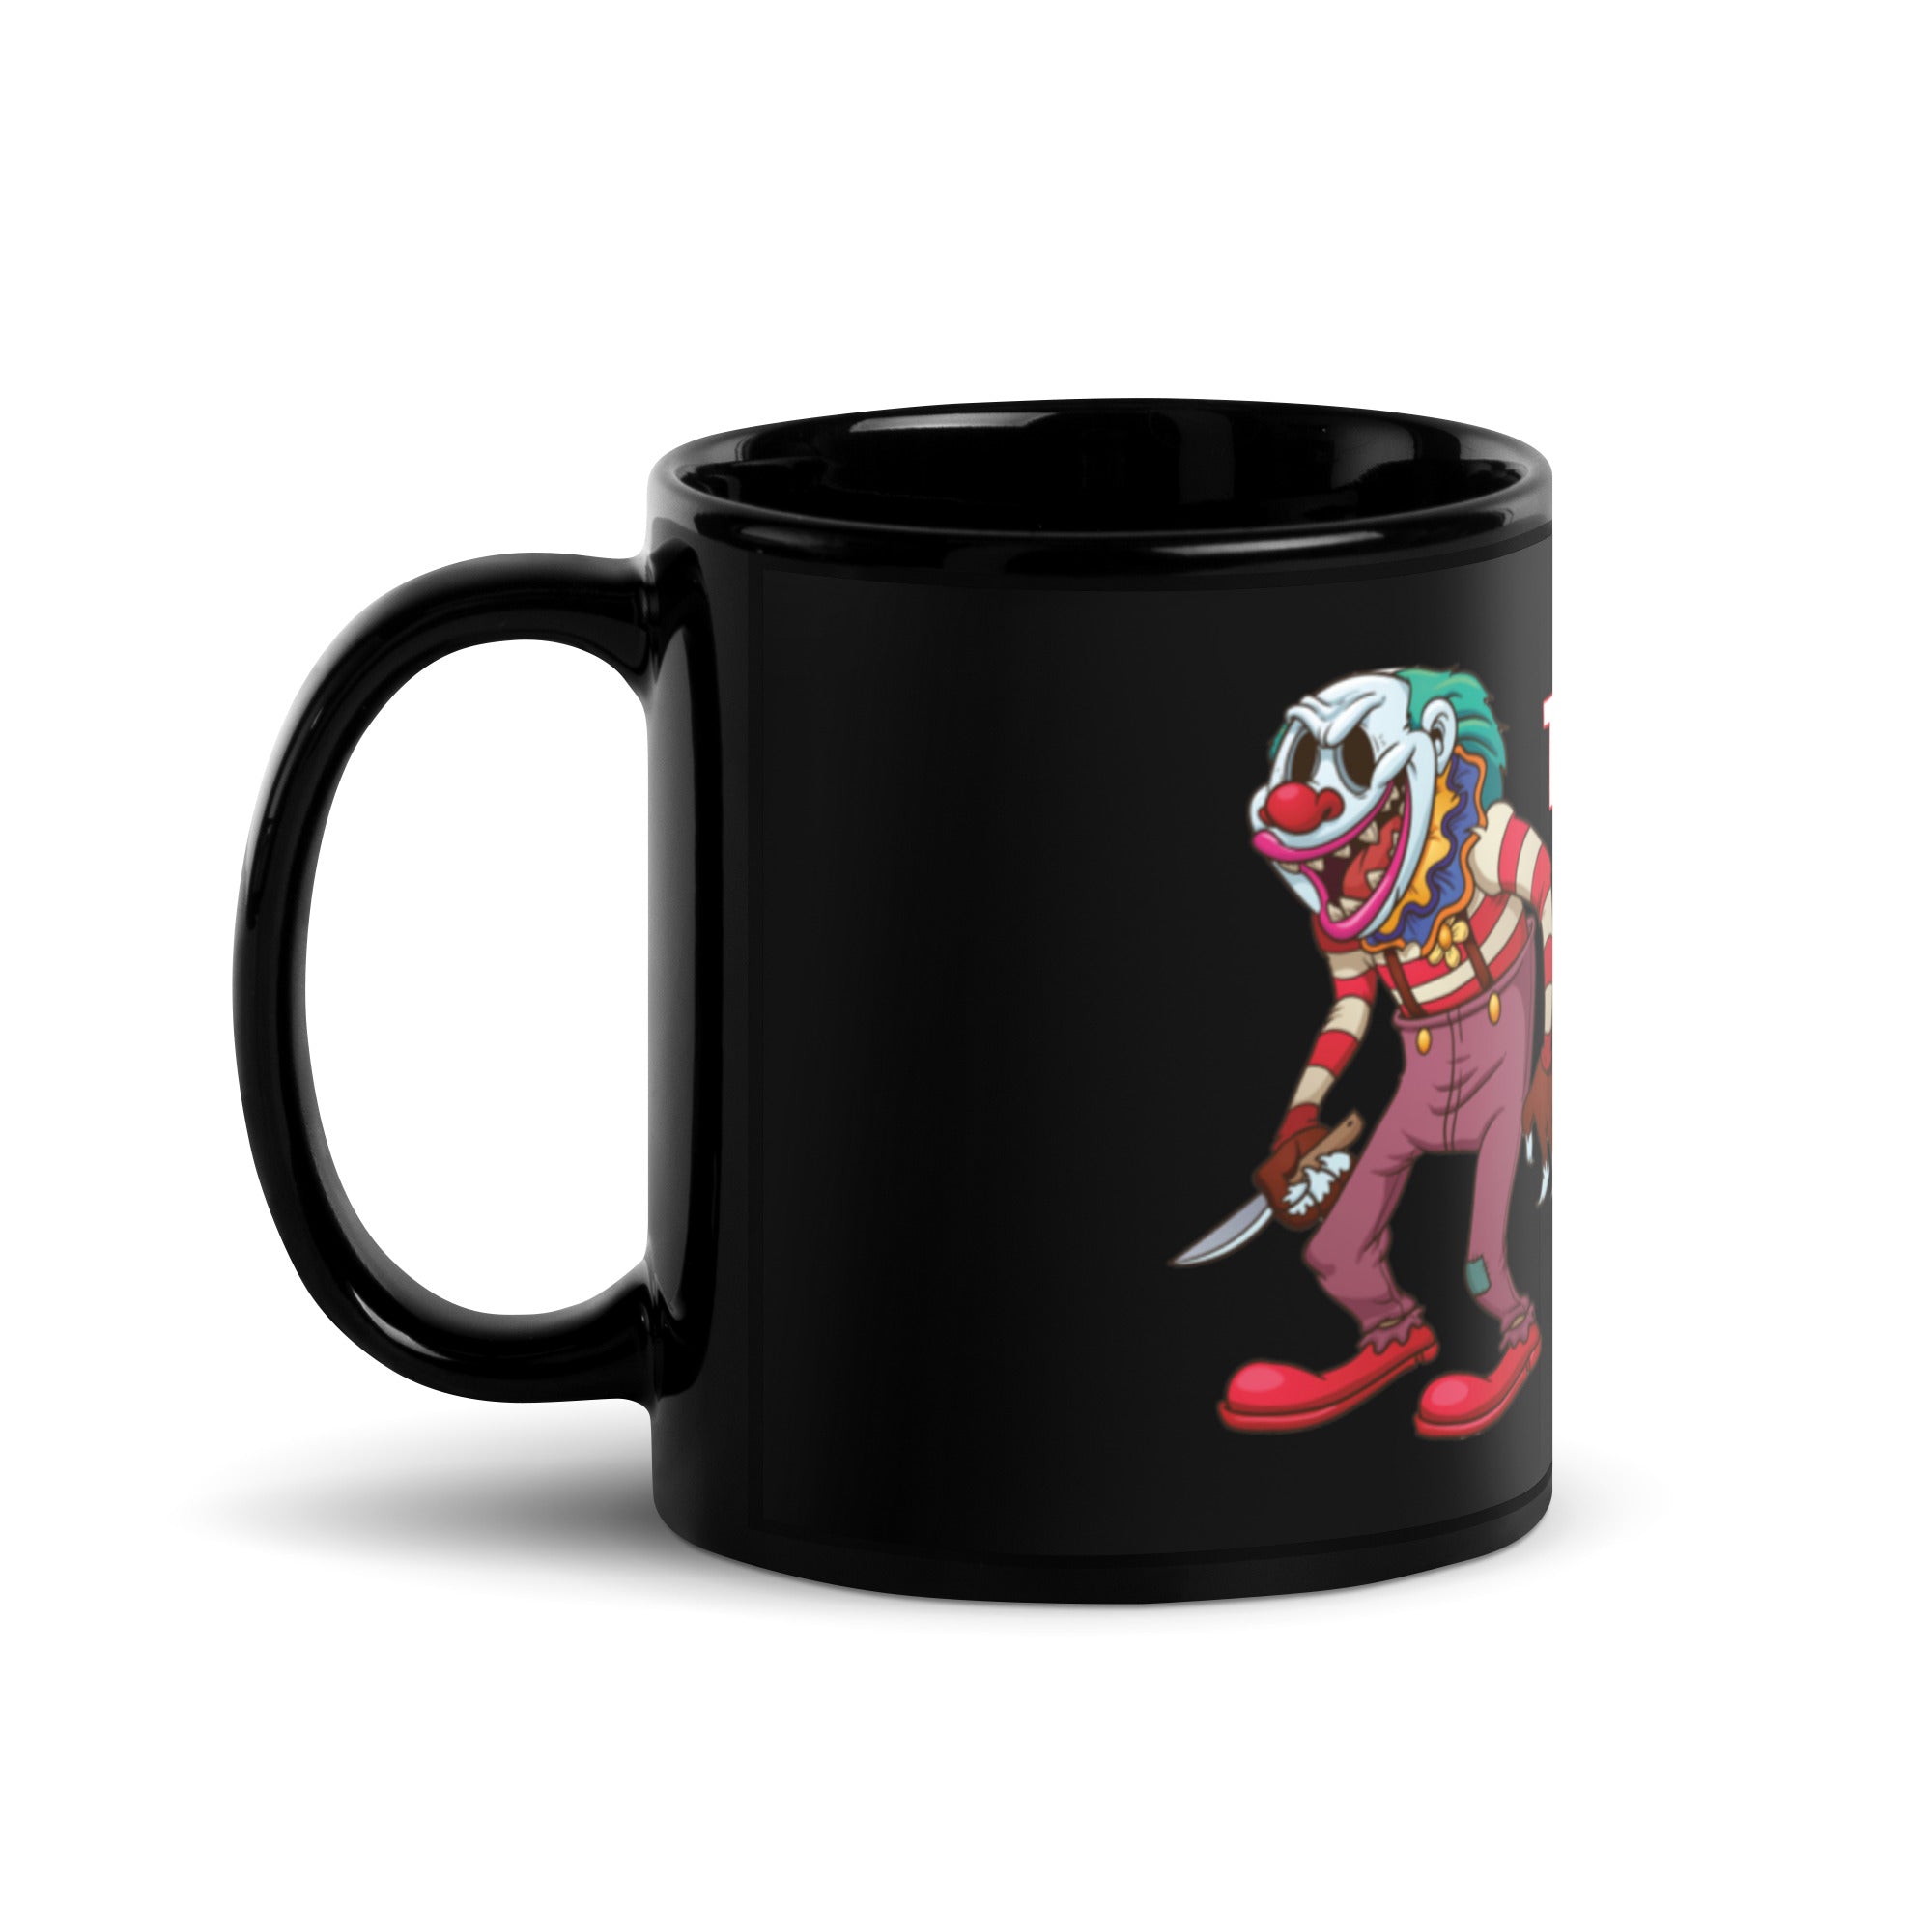 'The Clowns Will Kill Us All!' Black Glossy Mug